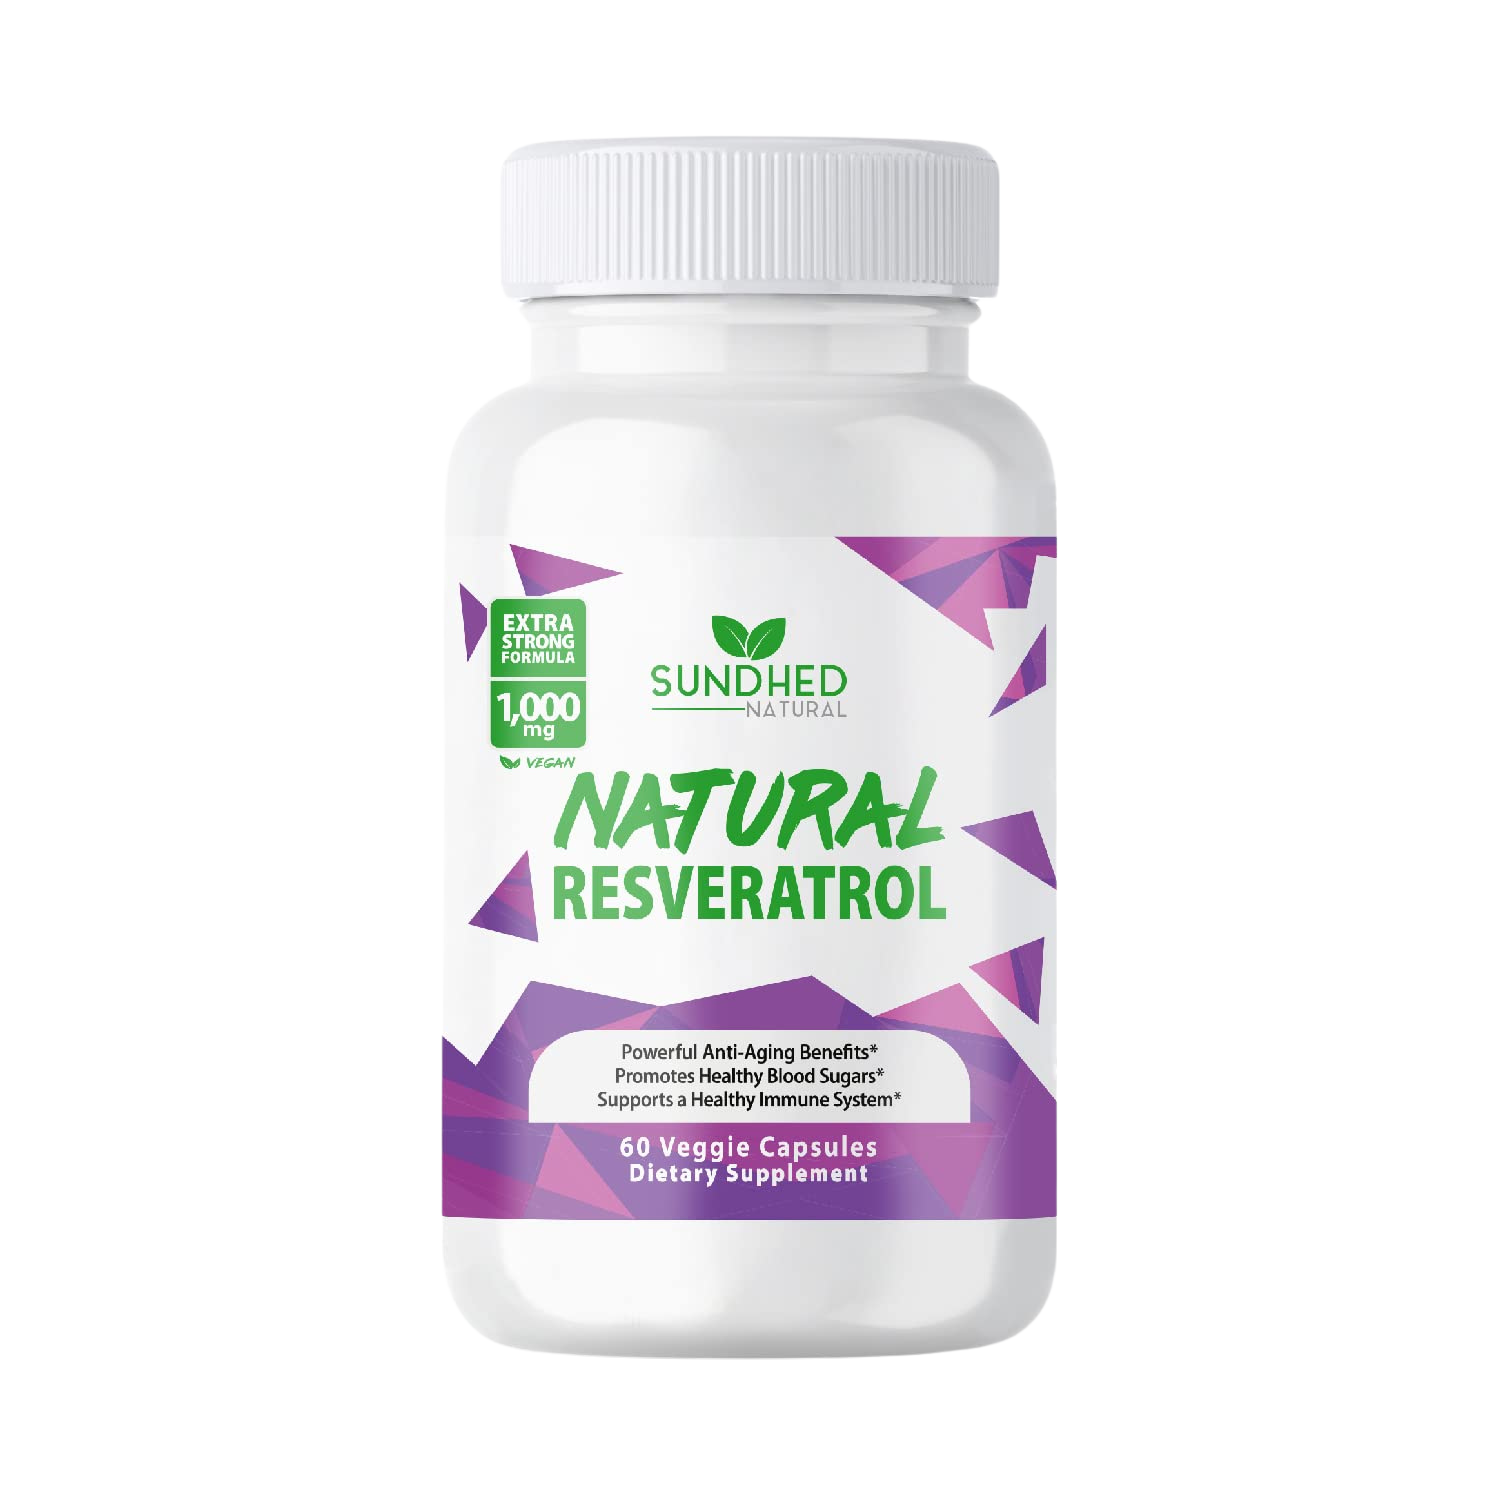 Sundhed Natural Resveratrol